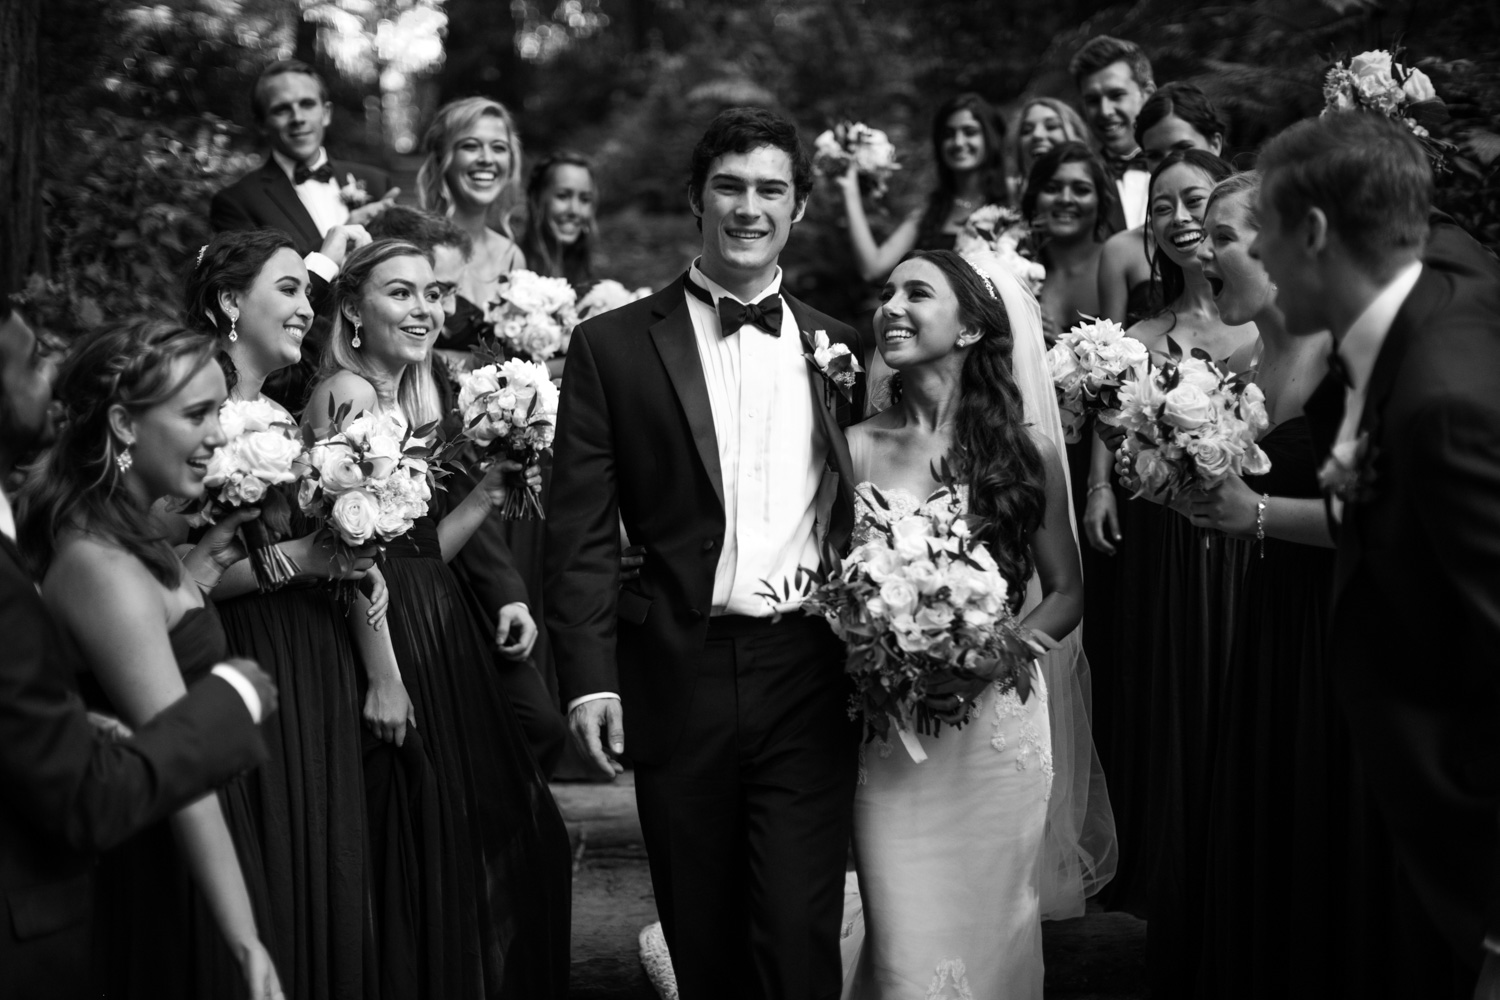 Danielle & Brandon's Fairytale Wedding Photographed by Samuel Lippke Studios